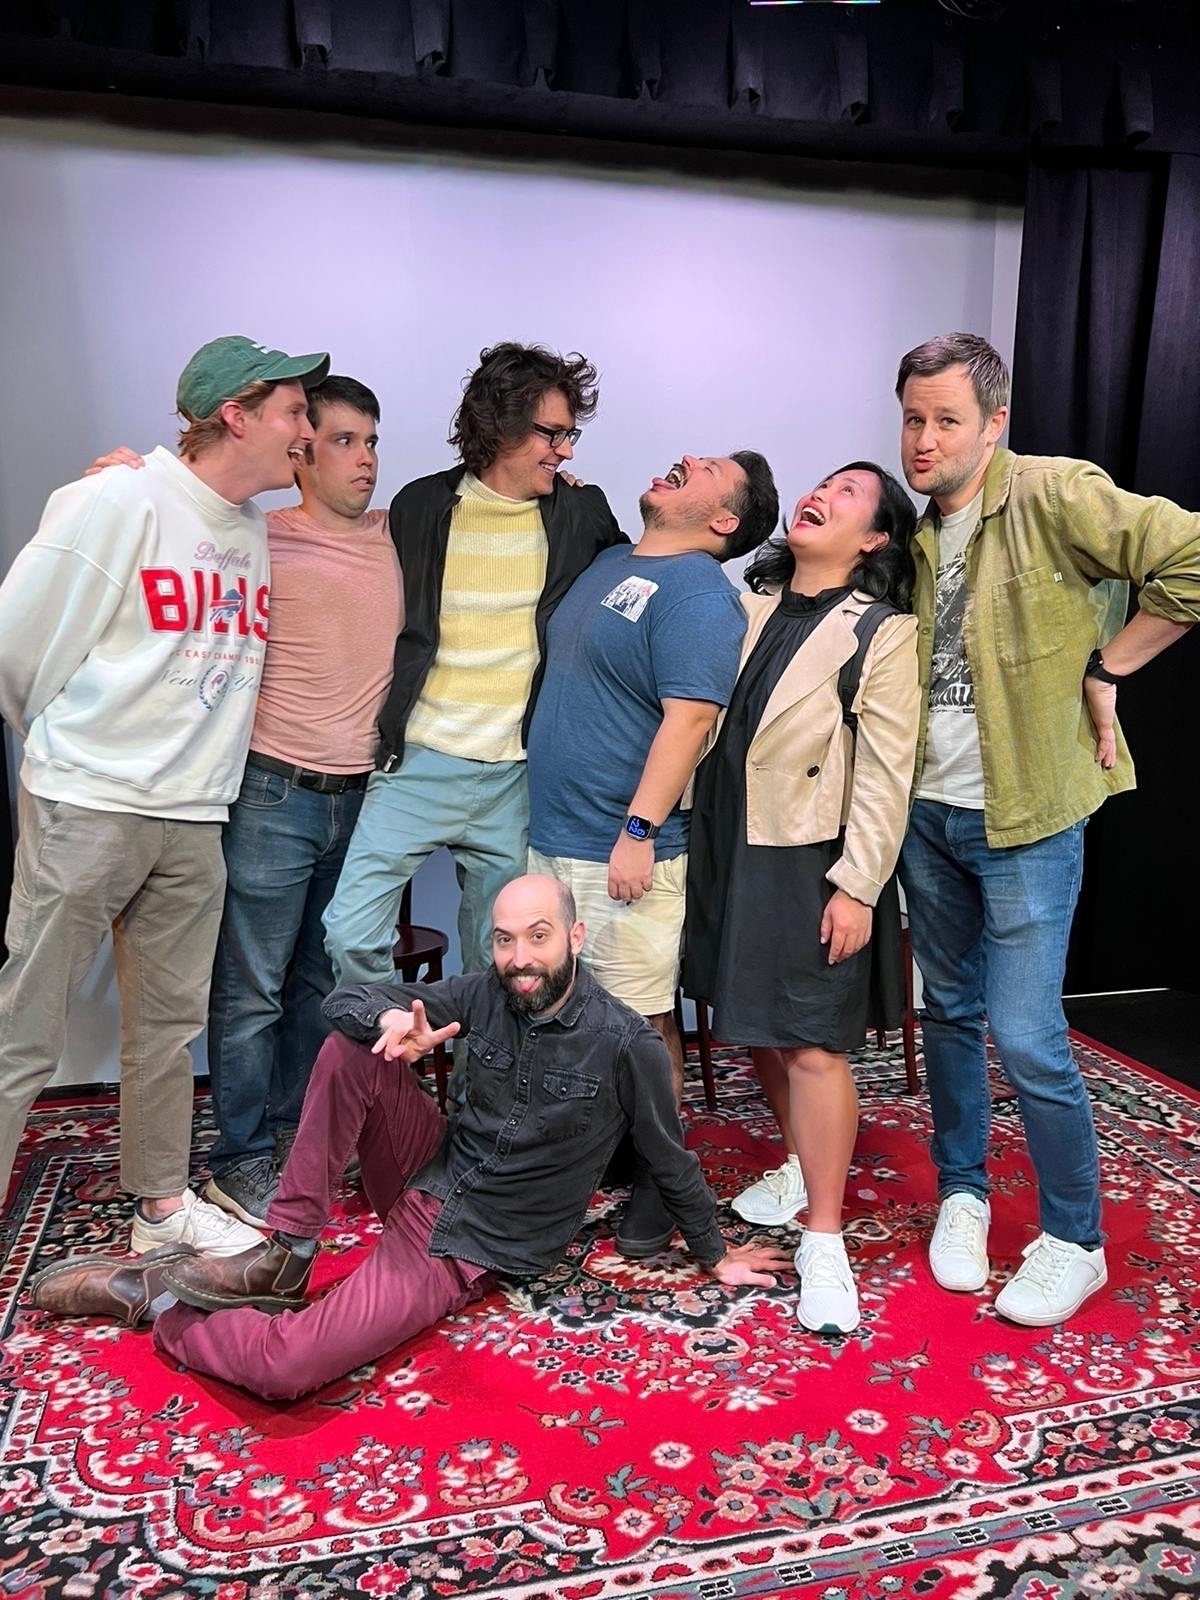 Seven improvisers posing goofy on stage